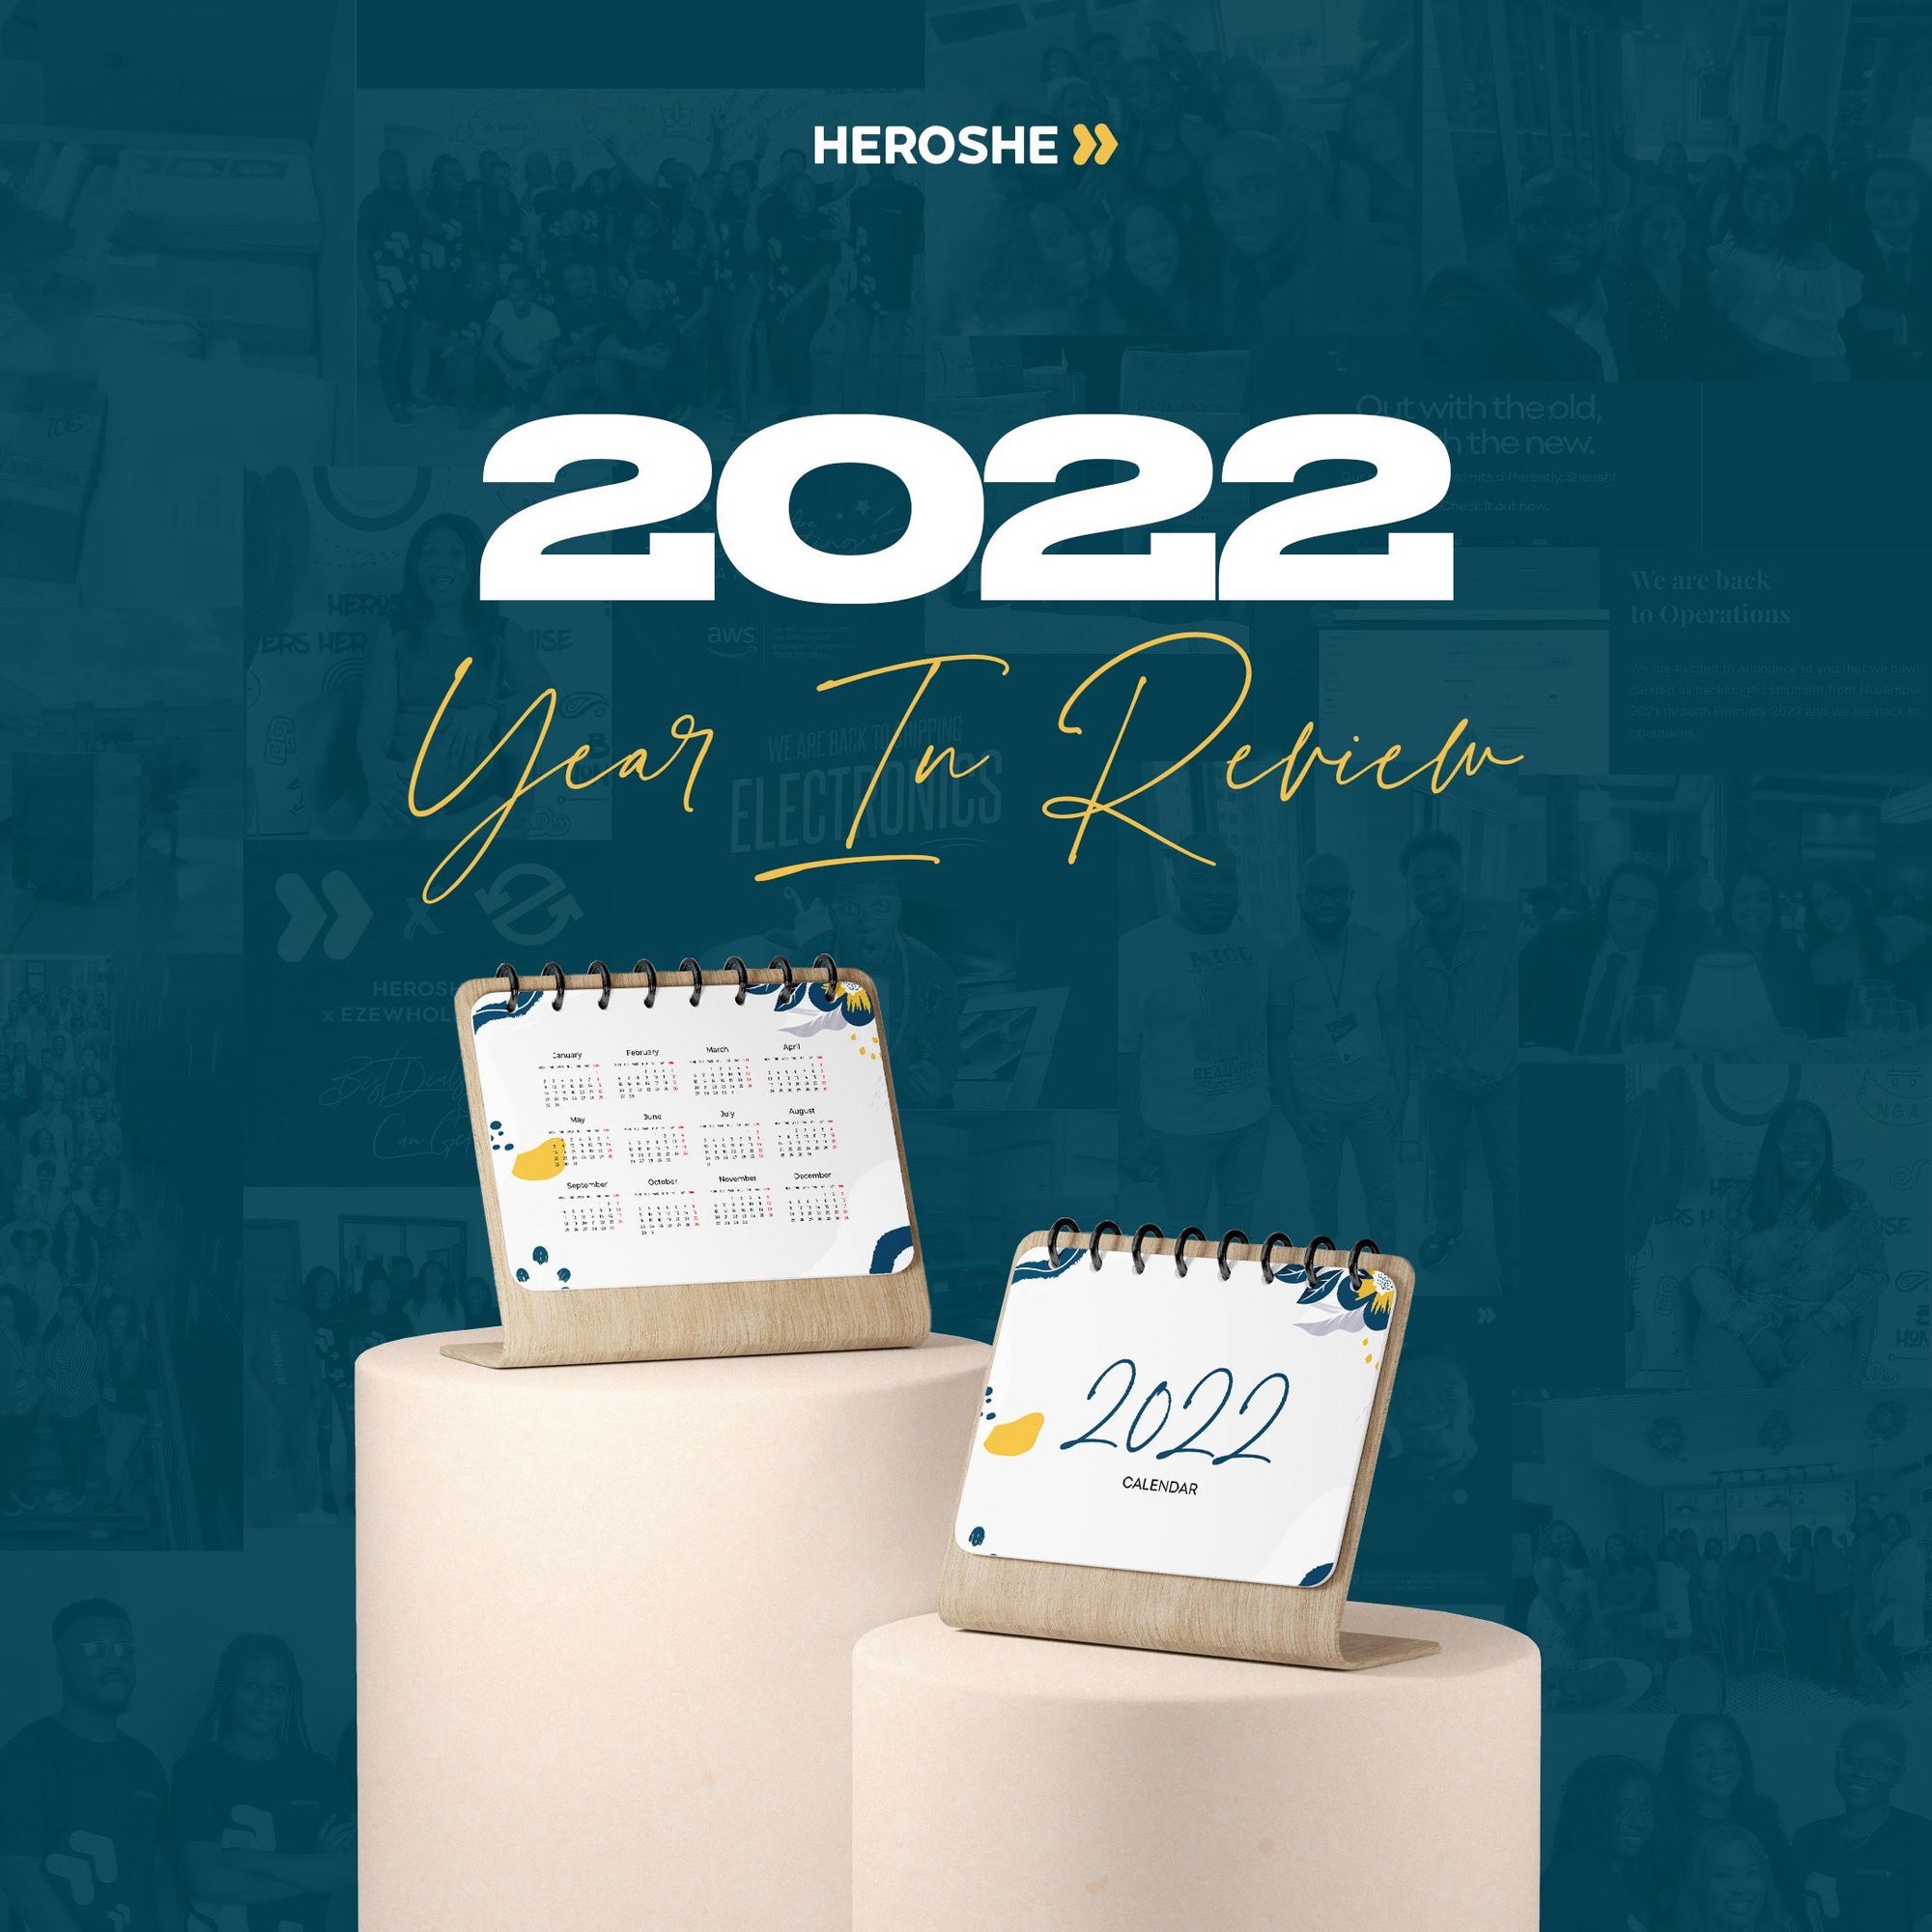 Heroshe 2022 Year in Review